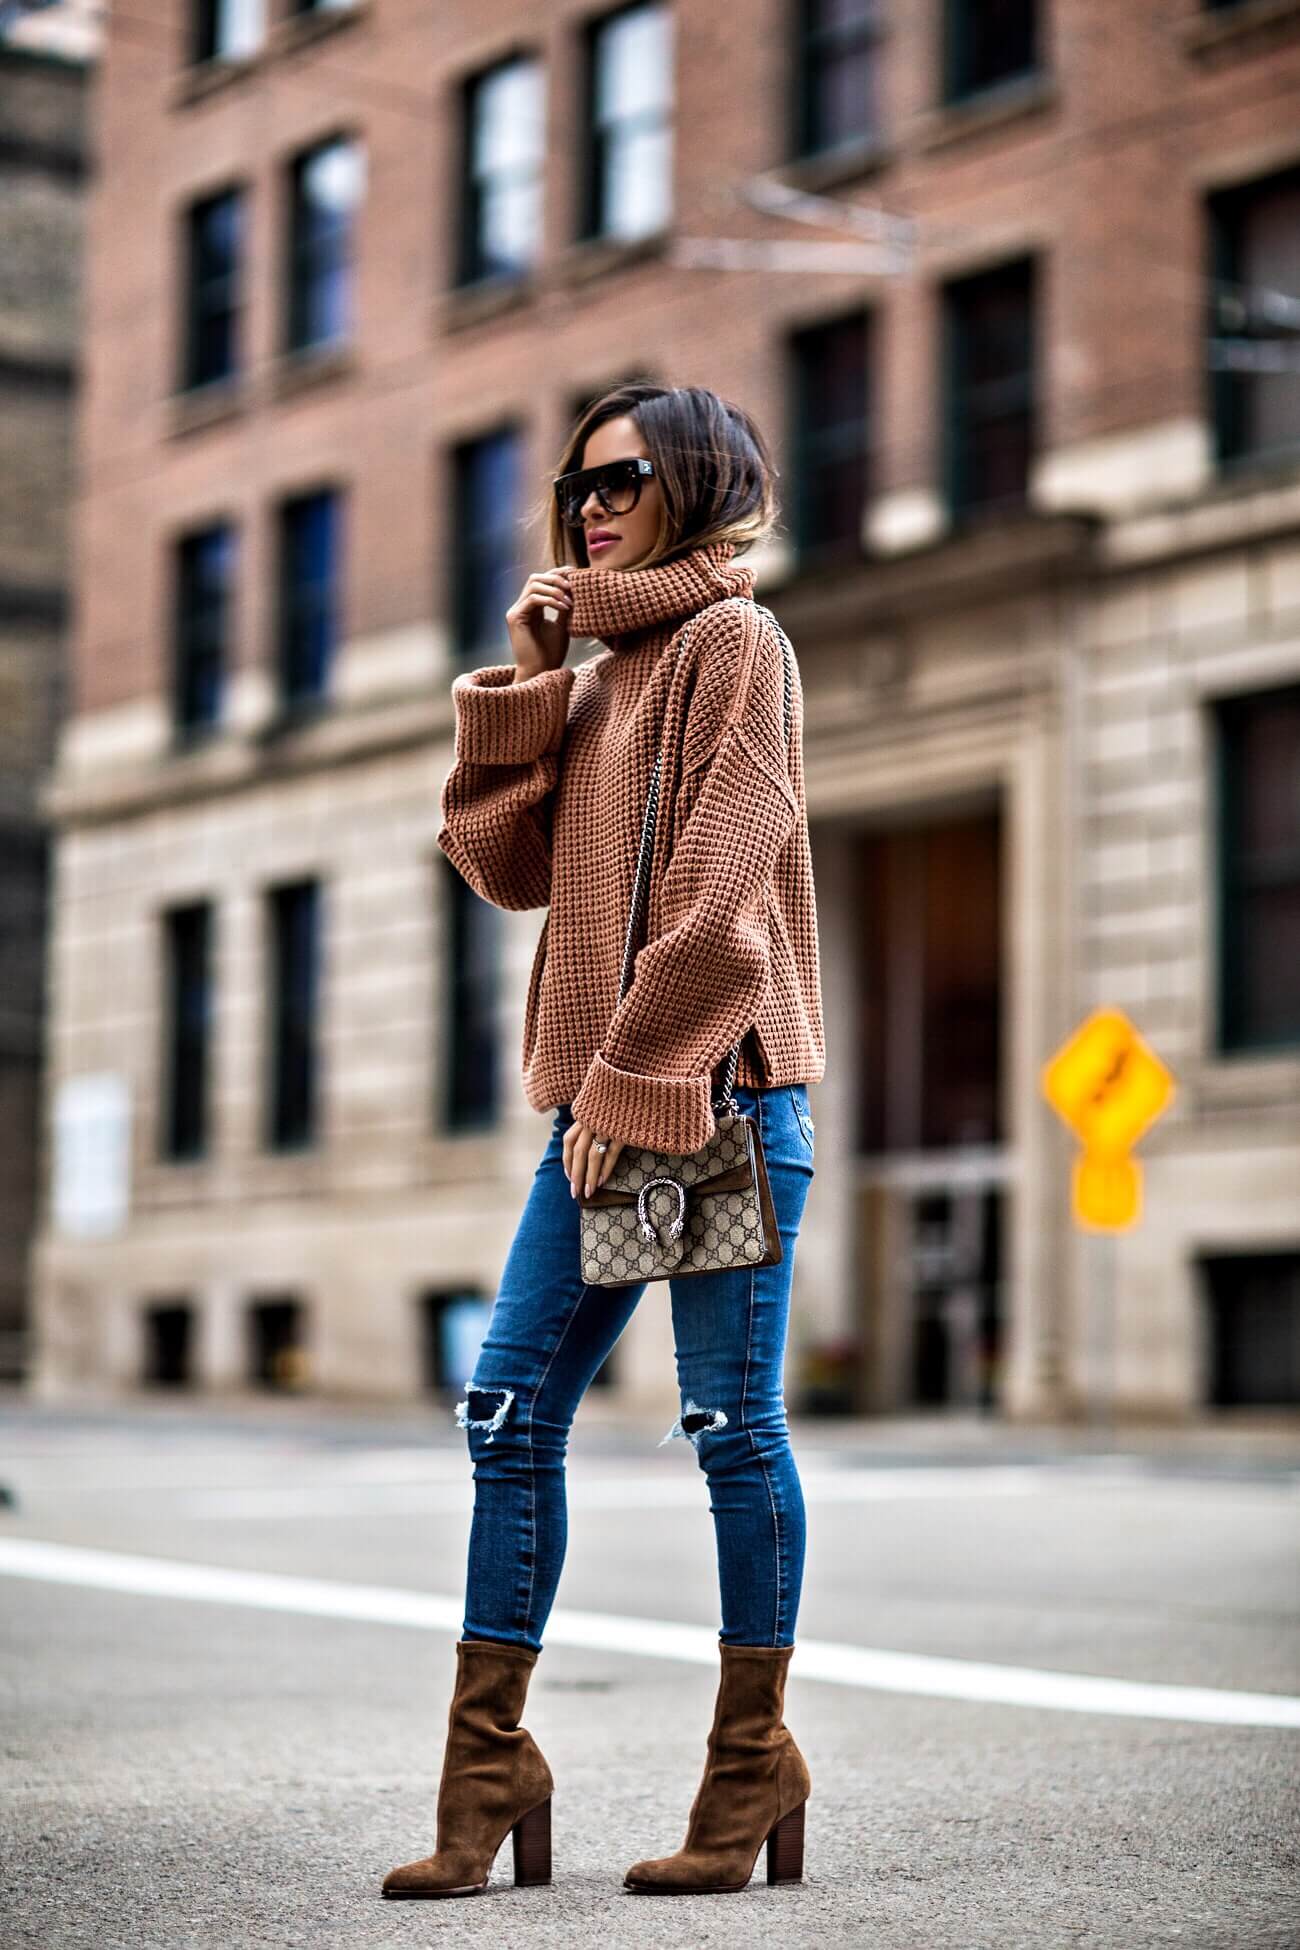 fashion blogger mia mia mine wearing an orange sweater and ag jeans